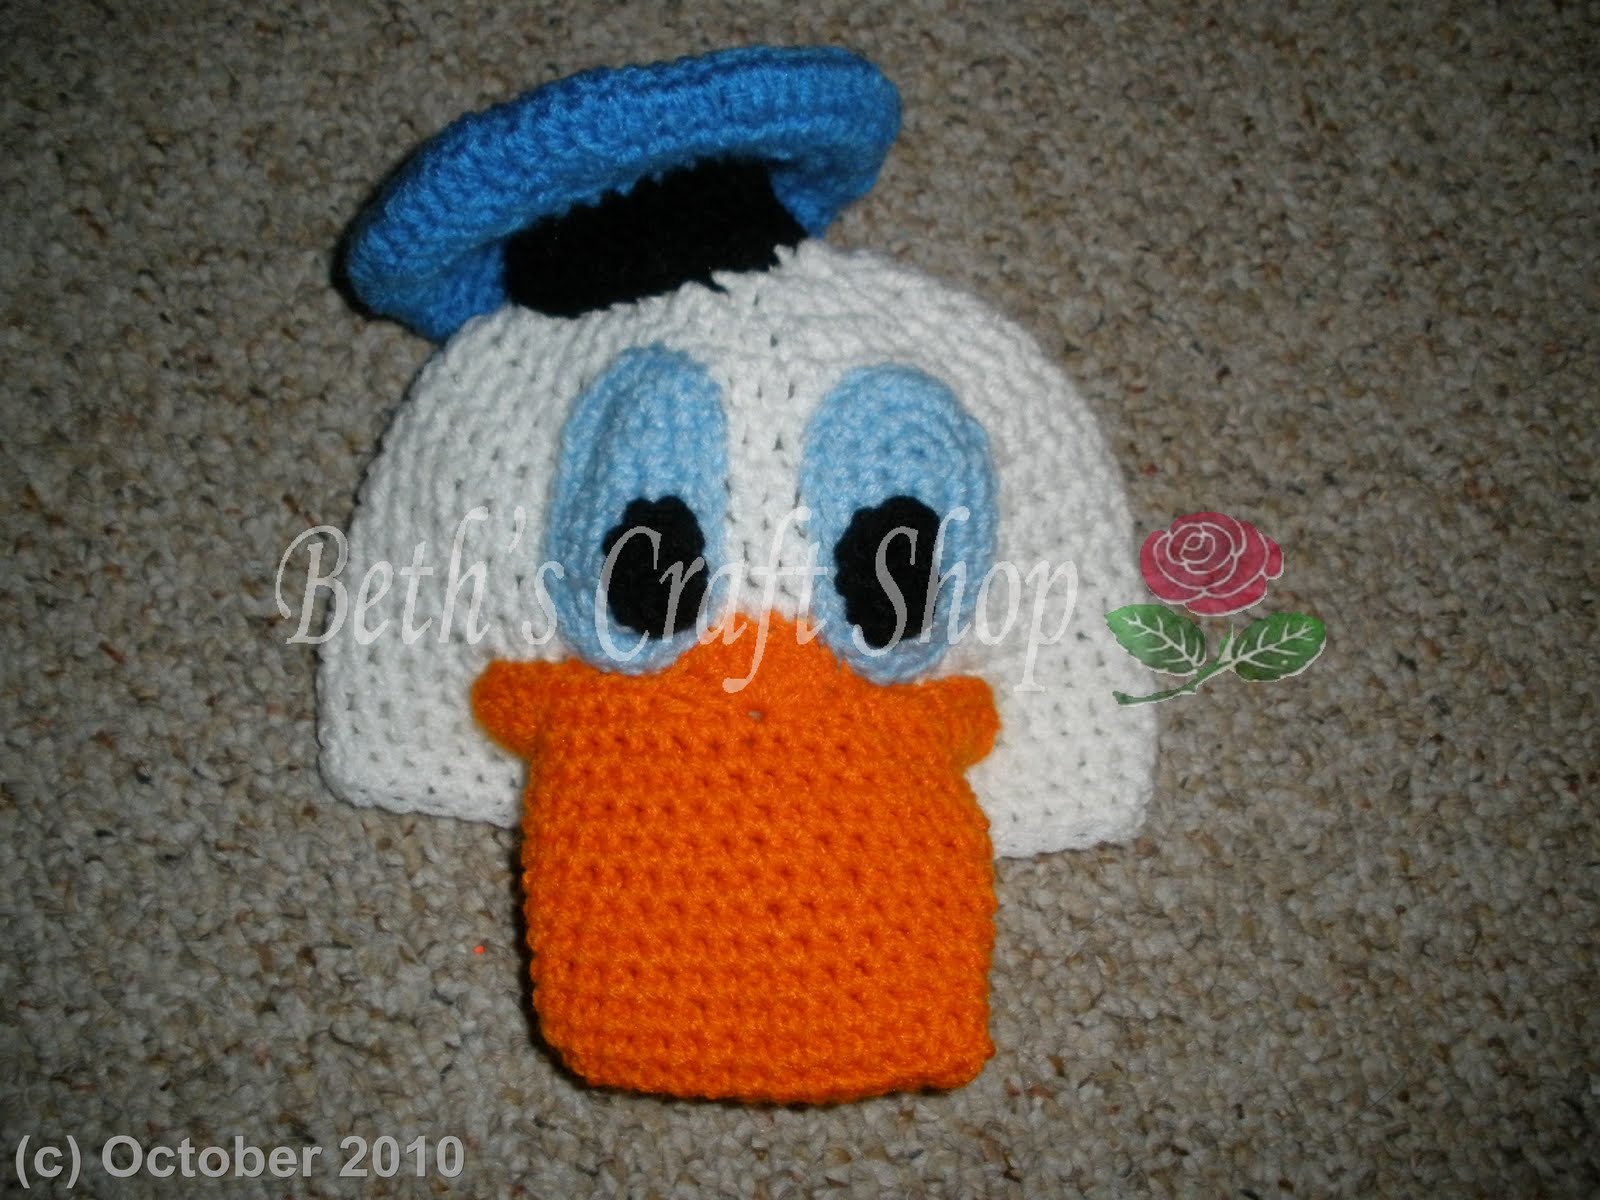 Beth's Craft Shop: Donald Duck Hat1600 x 1200